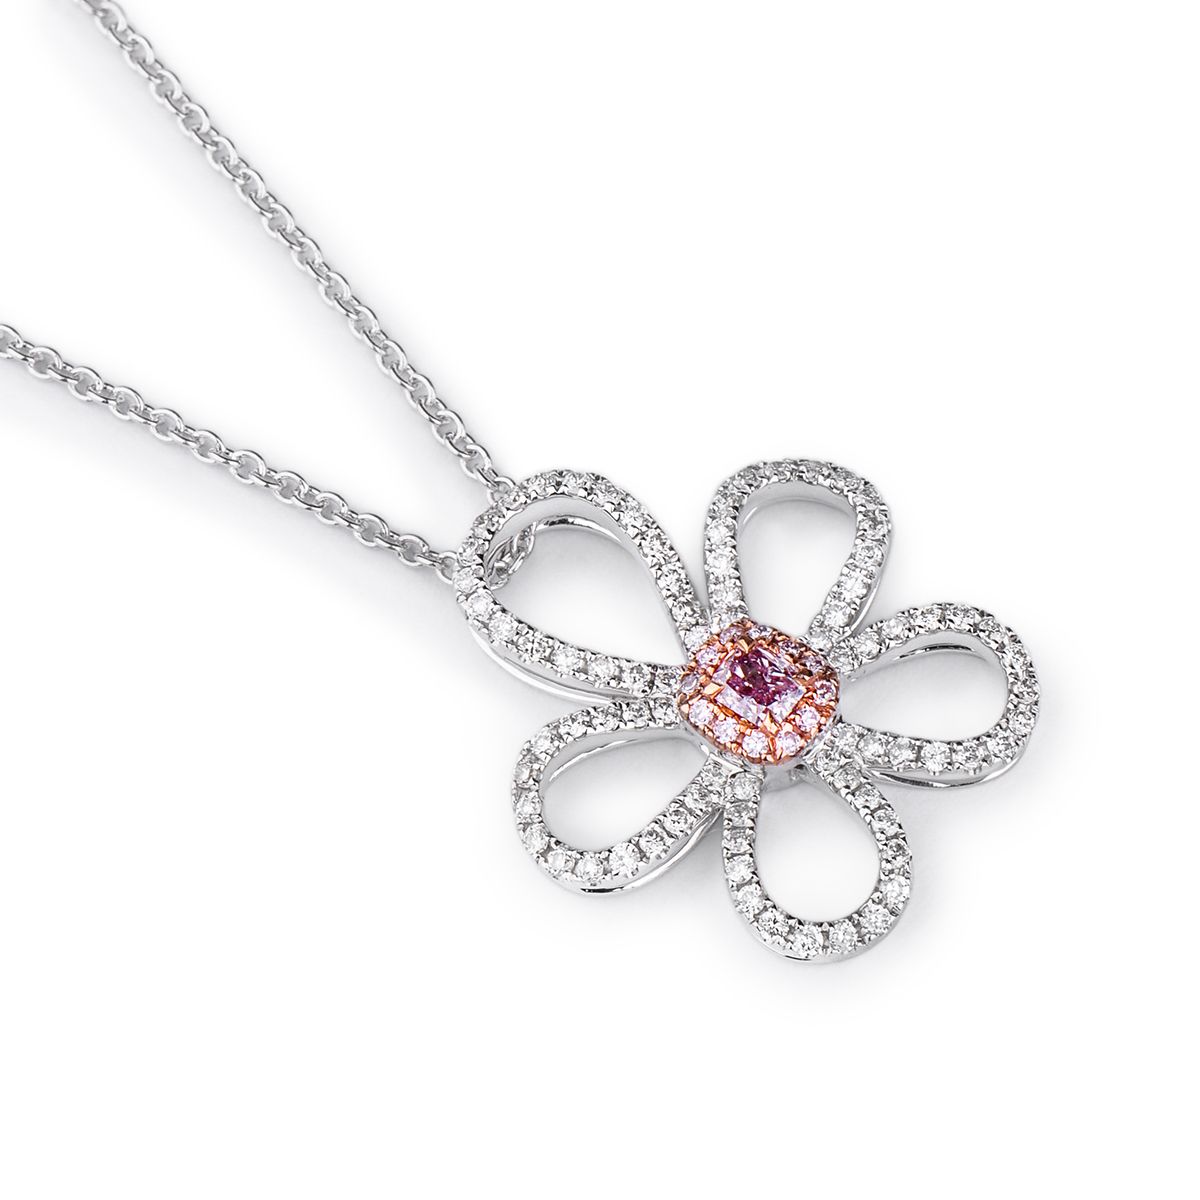 Fancy Brown Pink Diamond Necklace, 0.11 Ct. (0.56 Ct. TW), Radiant shape, EG_Lab Certified, J5826066538